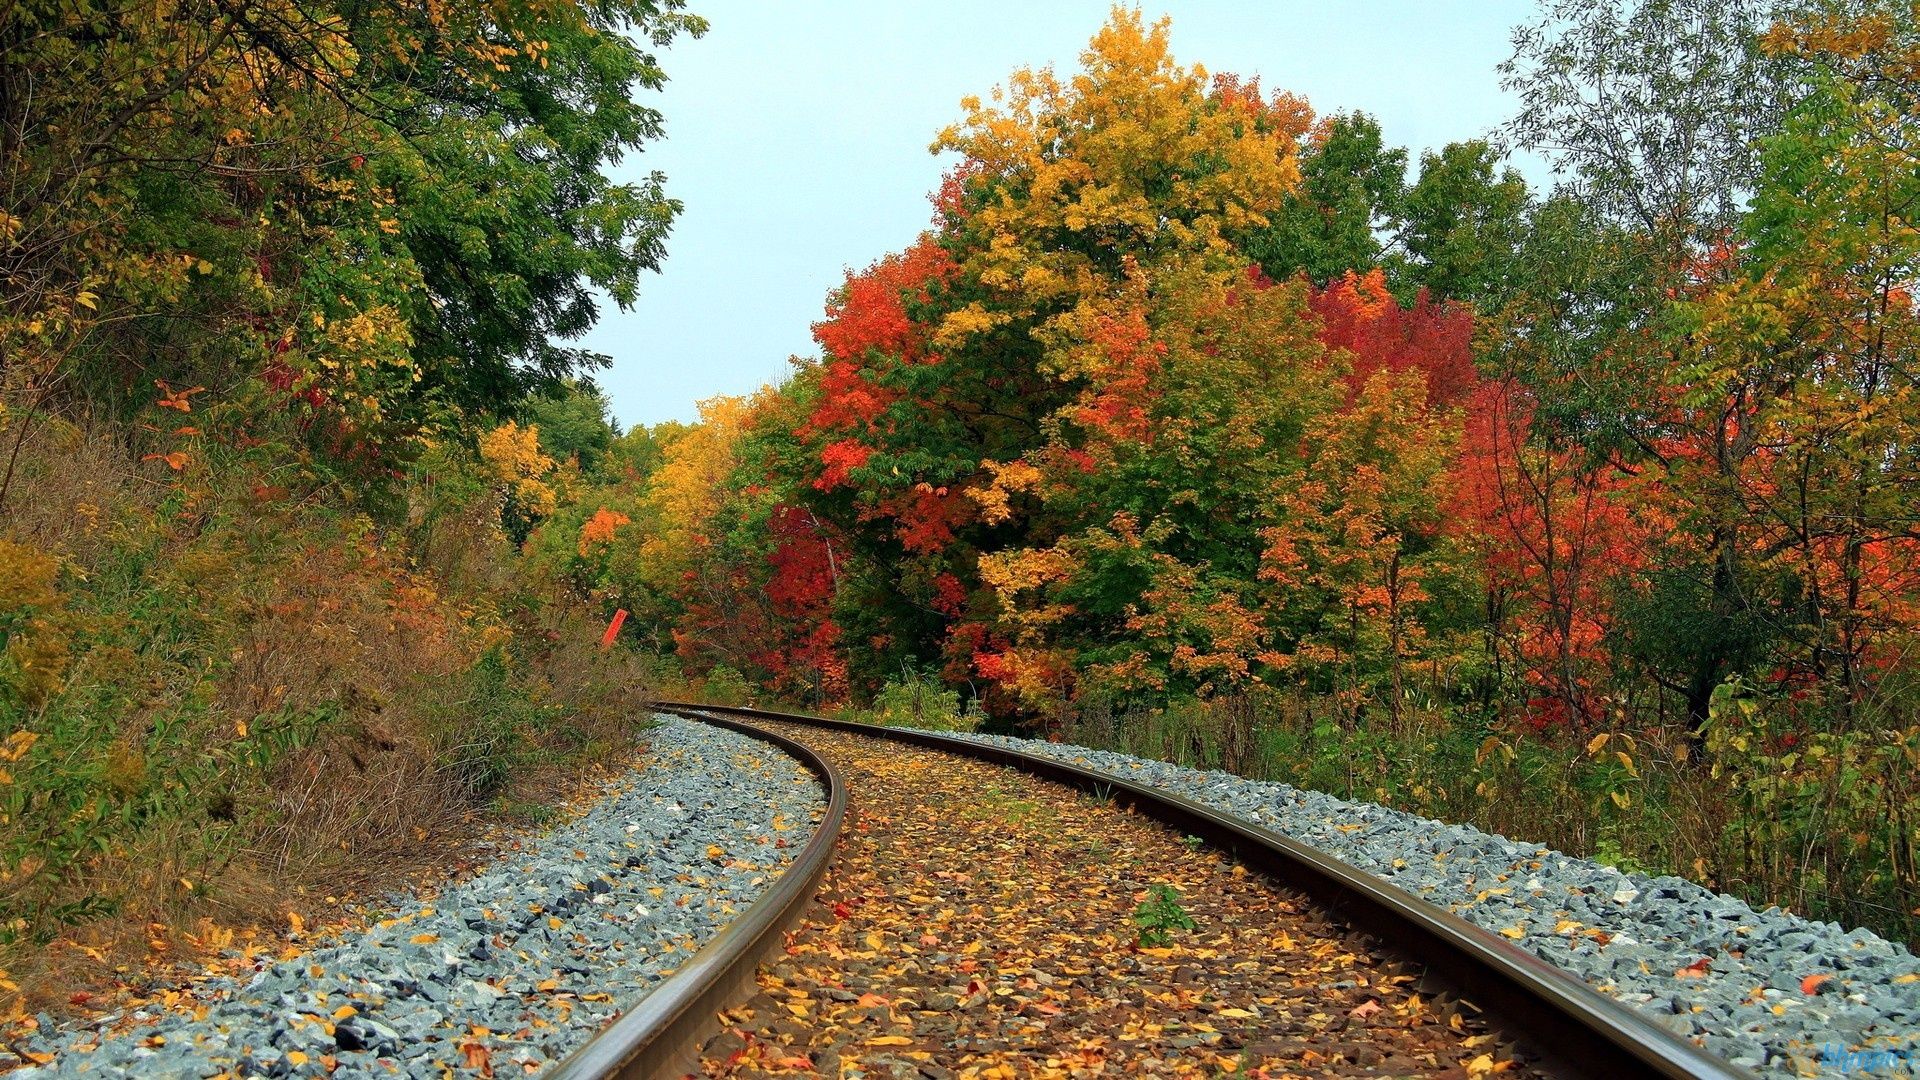 Relaxing Railroad Track Wallpaper